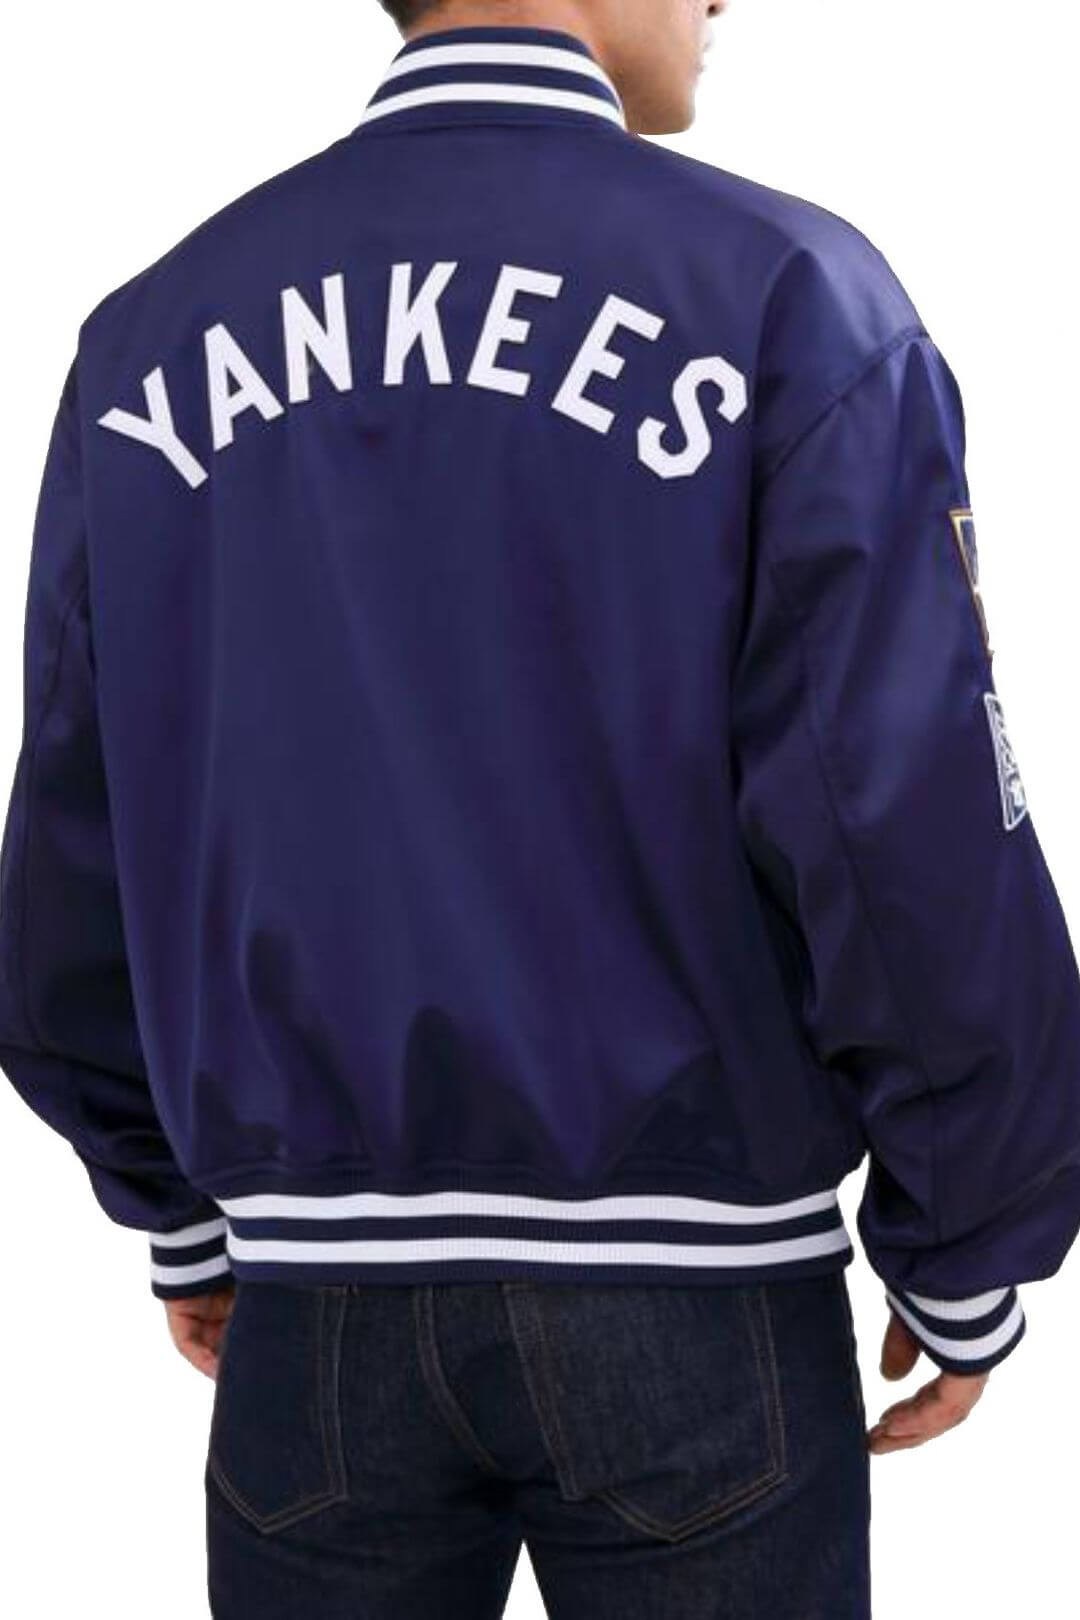 Maker of Jacket Fashion Jackets New York Yankees Pro Standard Navy Varsity